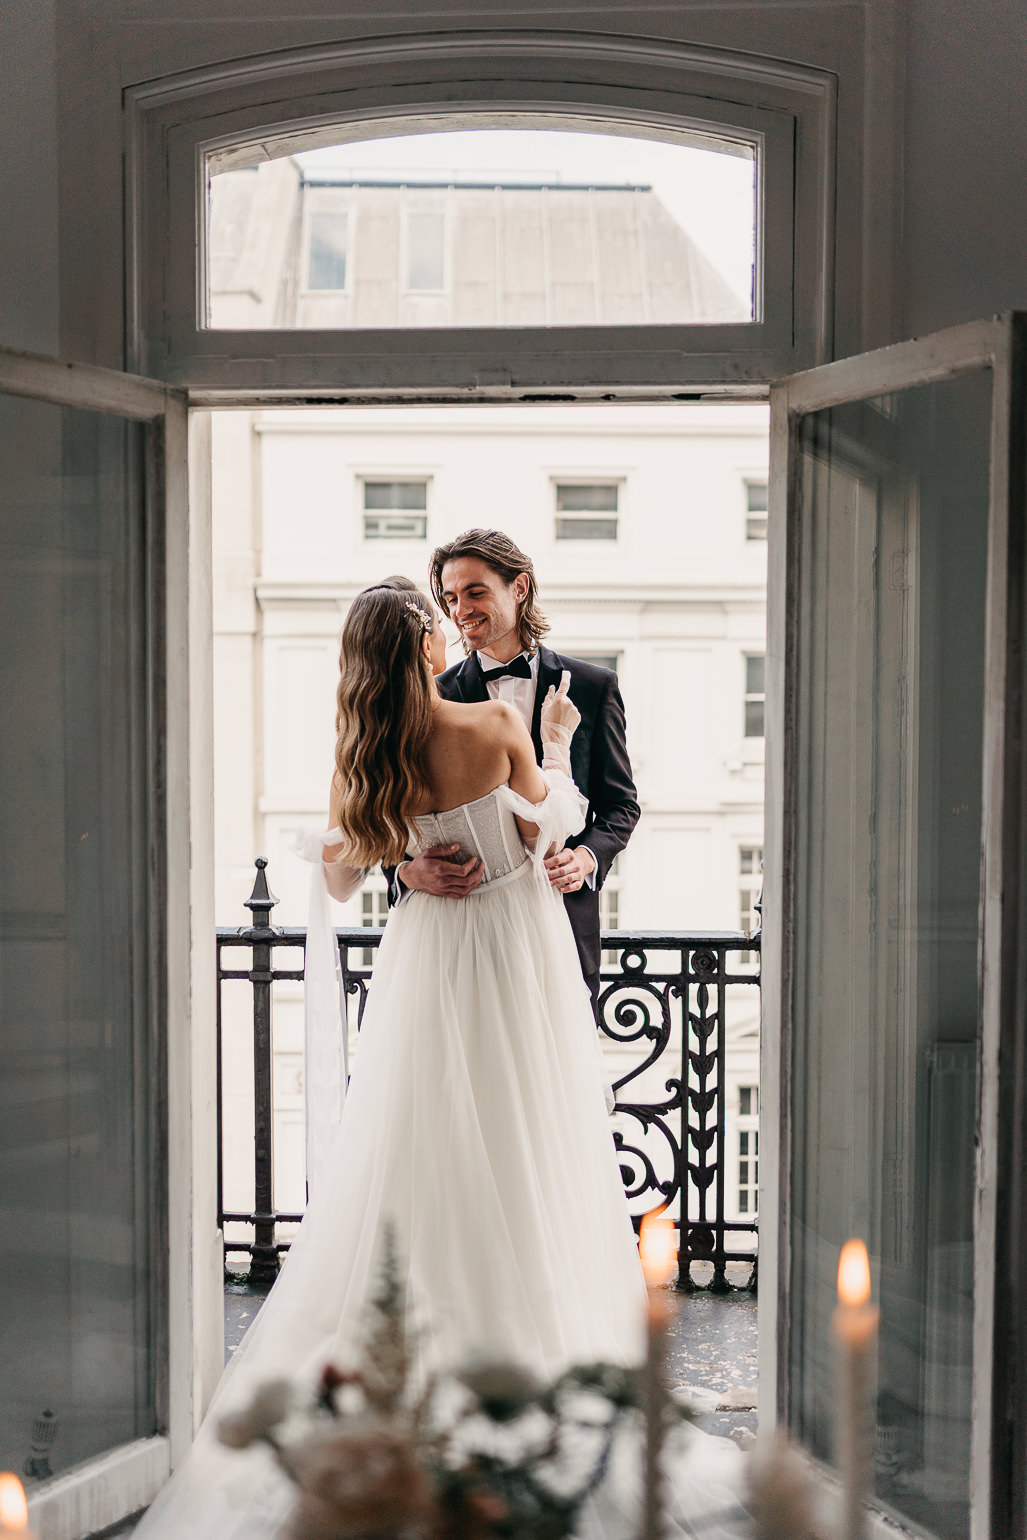 London elopement photographer, Monreal bridal 'Tina' dress, black tie london wedding 